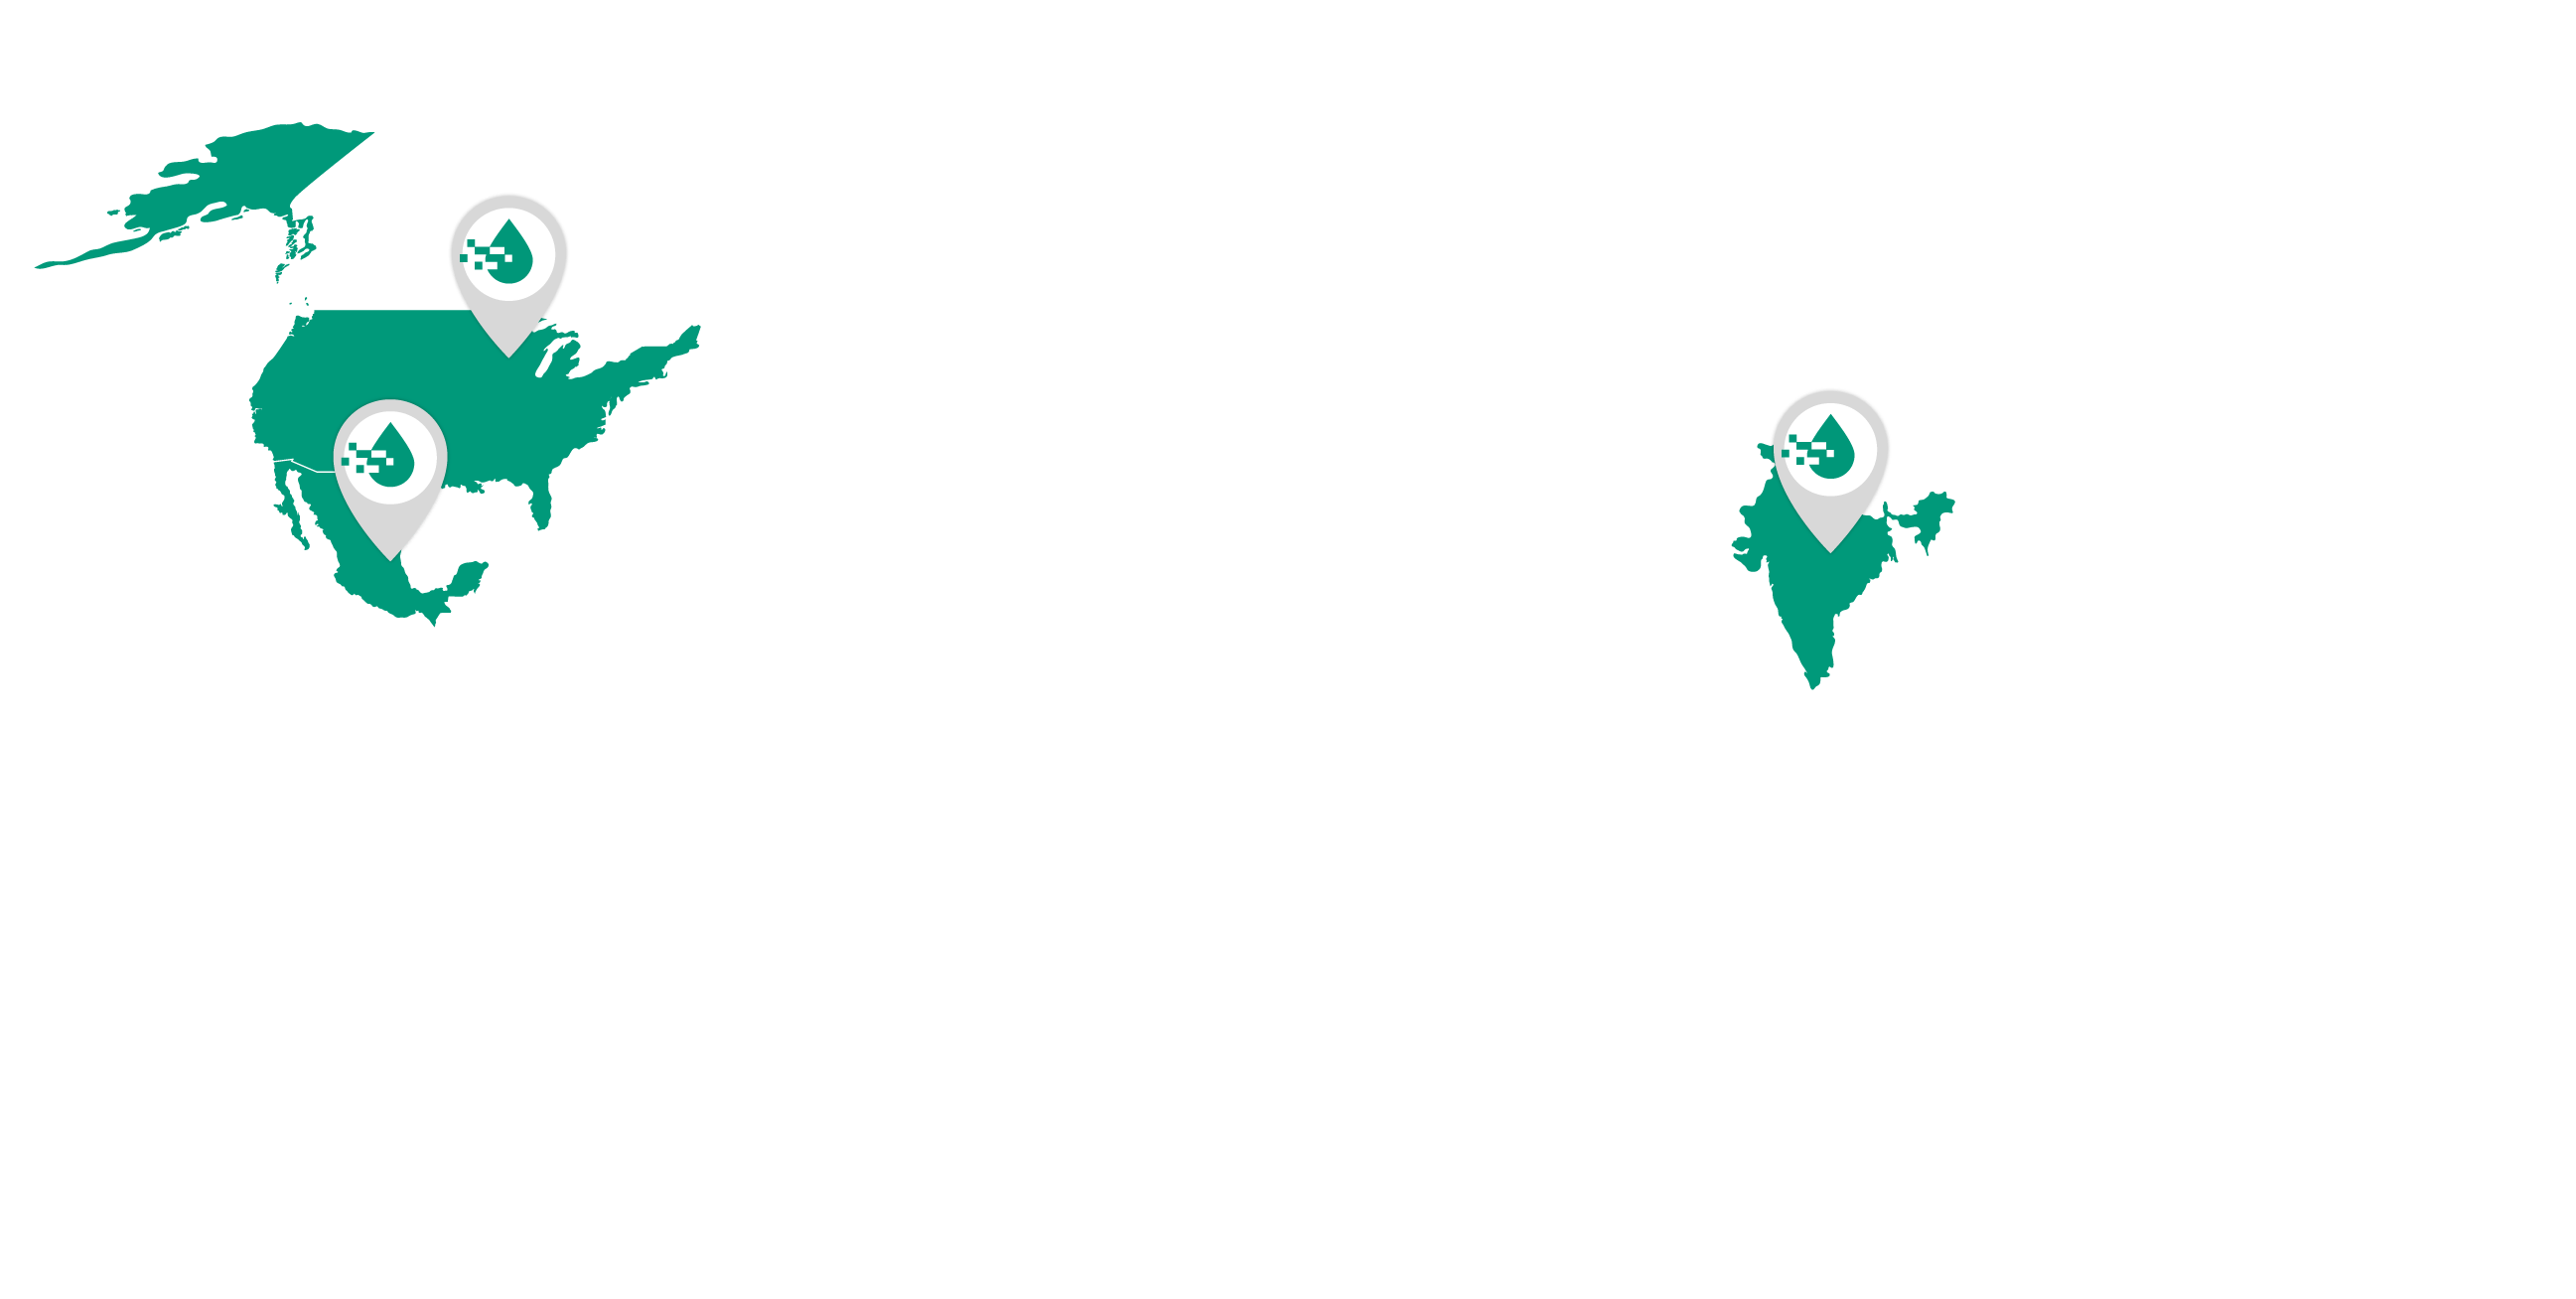 World map: Buckman Digital Water currently has representatives